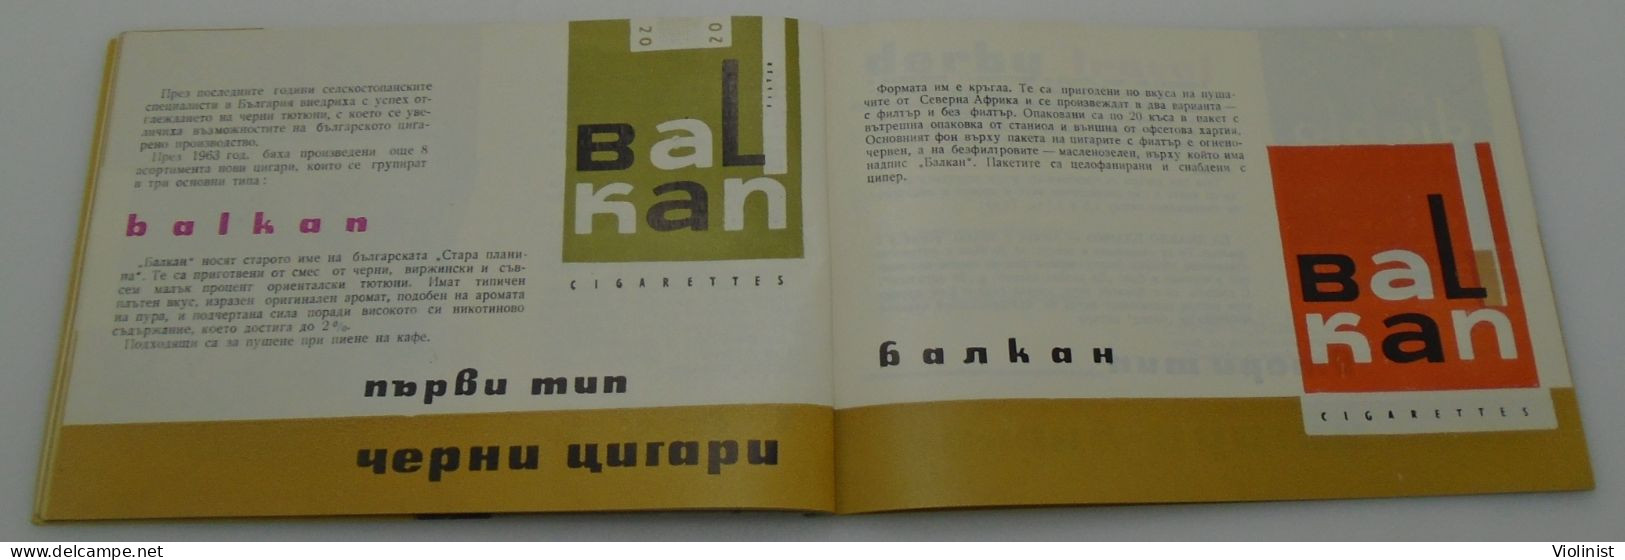 Old brochure of Bulgarian cigarettes